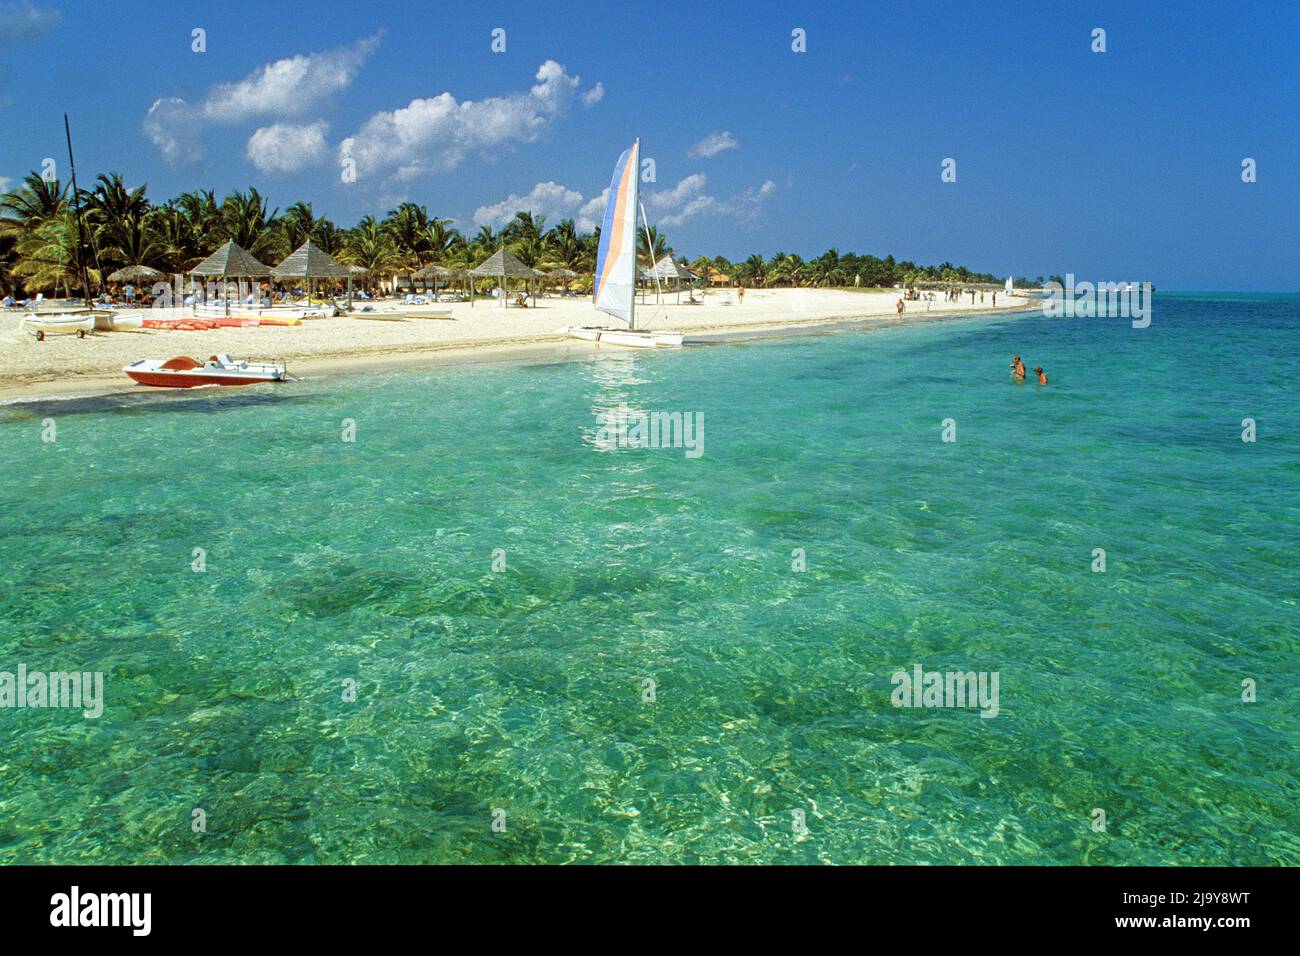 Strandleben in Santa Lucia, Provinz Camaguey, Kuba, Karibik | Strandleben in St. Lucia, Provinz Camaguey, Kuba, Karibik Stockfoto